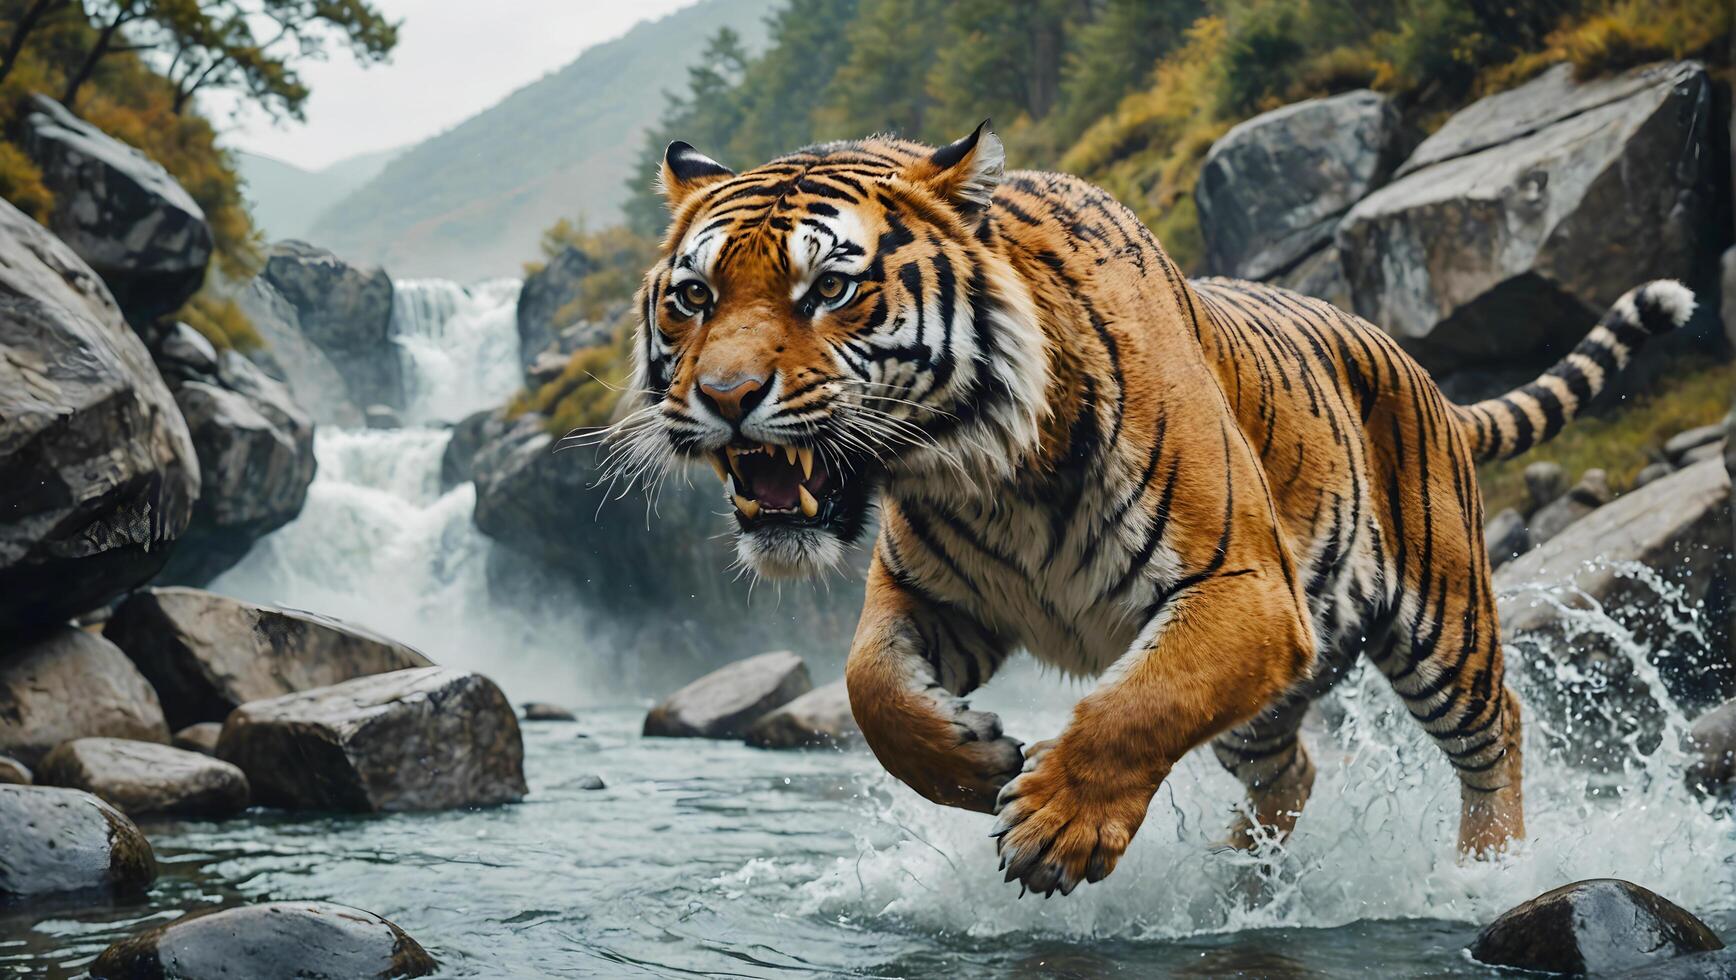 våldsam tiger hoppa i verkan ut av flod ström. djurliv fri Foto